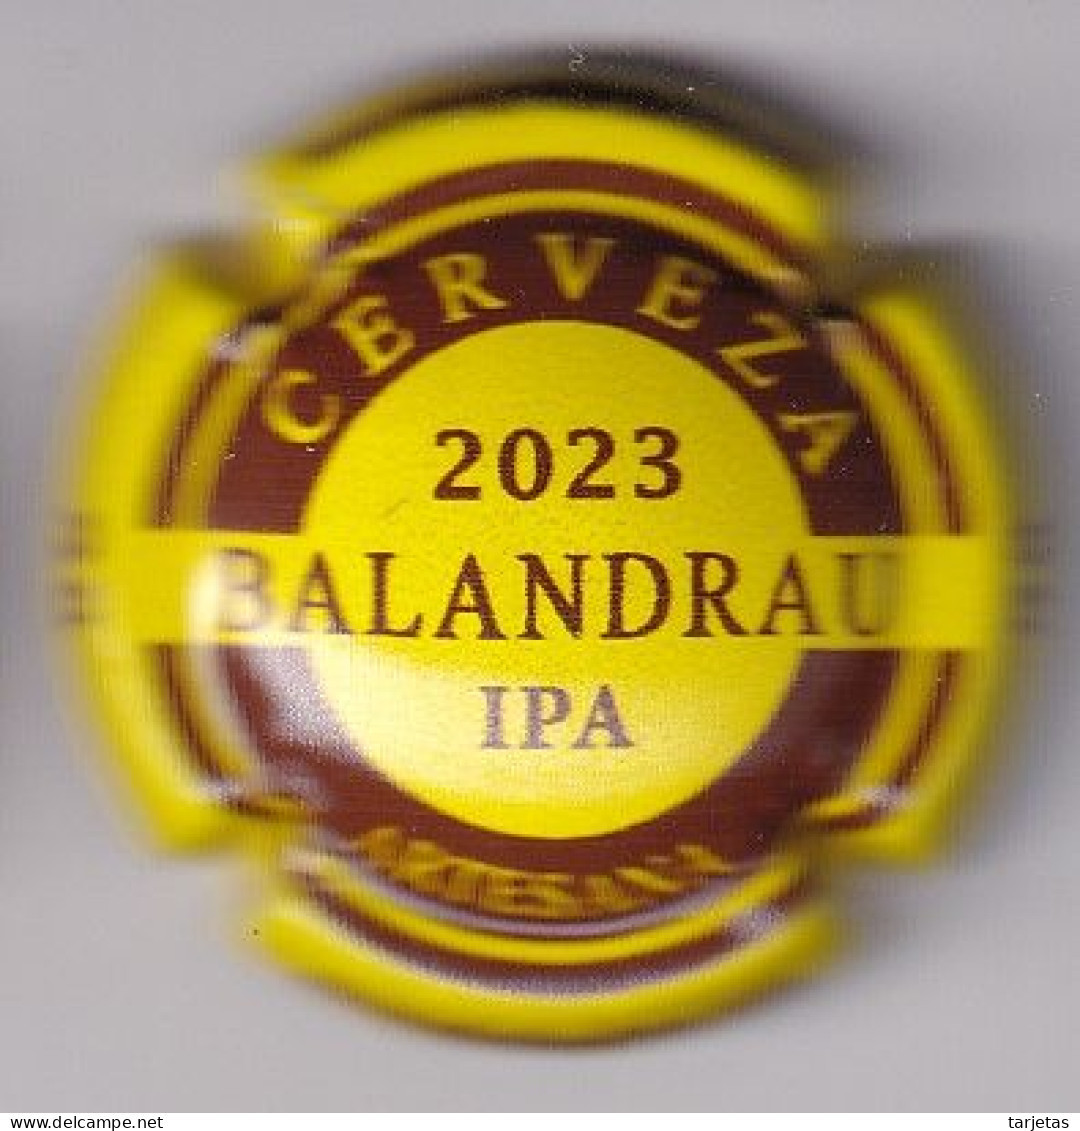 CHAPA DE CERVEZA ARTESANA BALANDRAU IPA 2023 (BEER-BIERE) CORONA - Beer